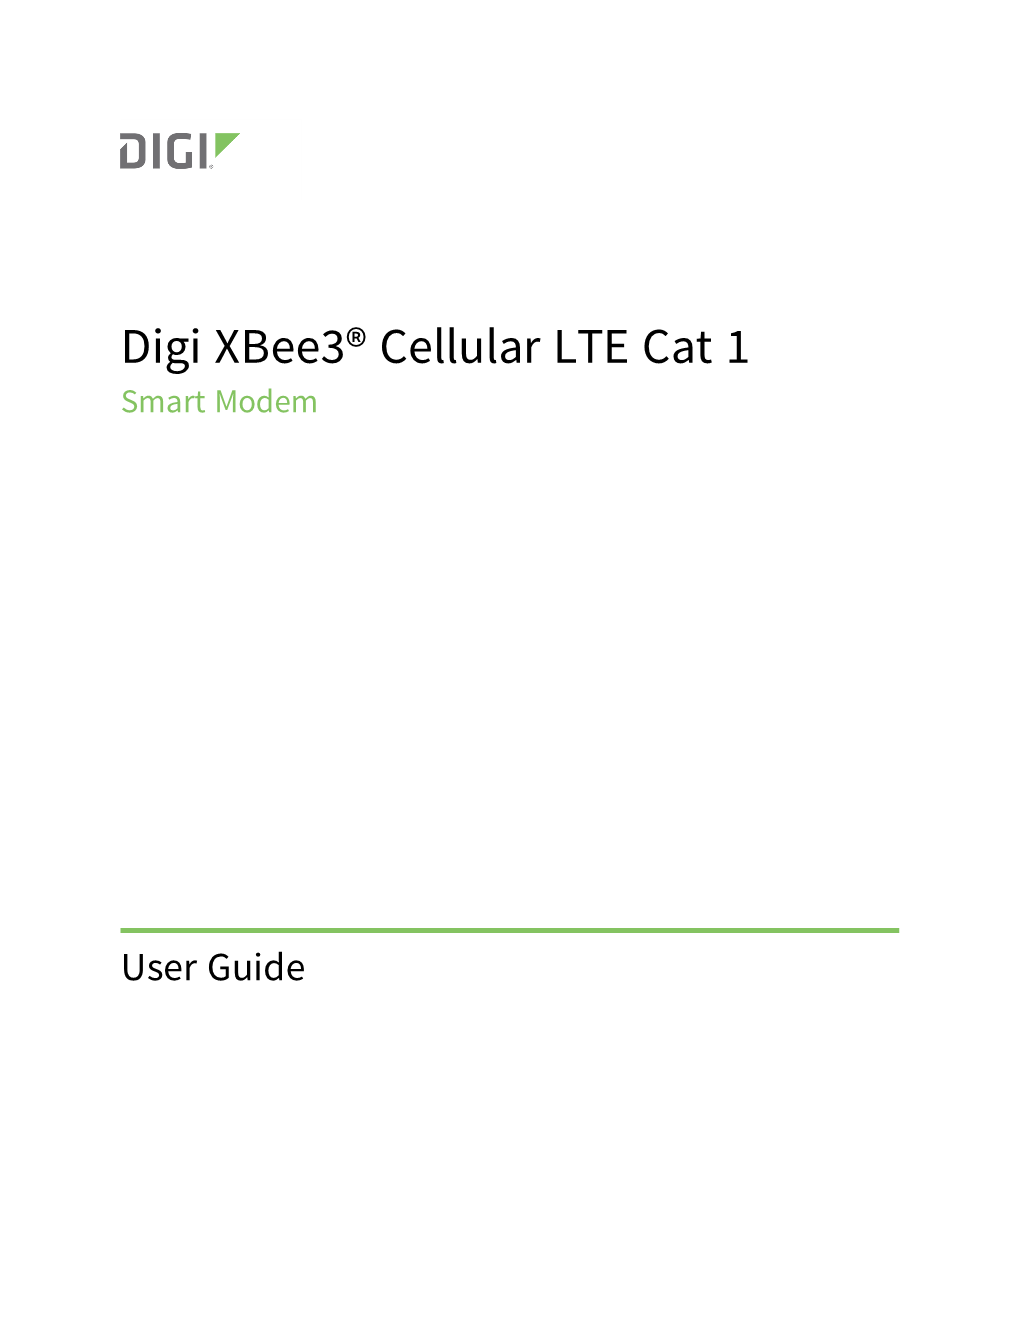 Digi Xbee3® Cellular LTE Cat 1 Smart Modem